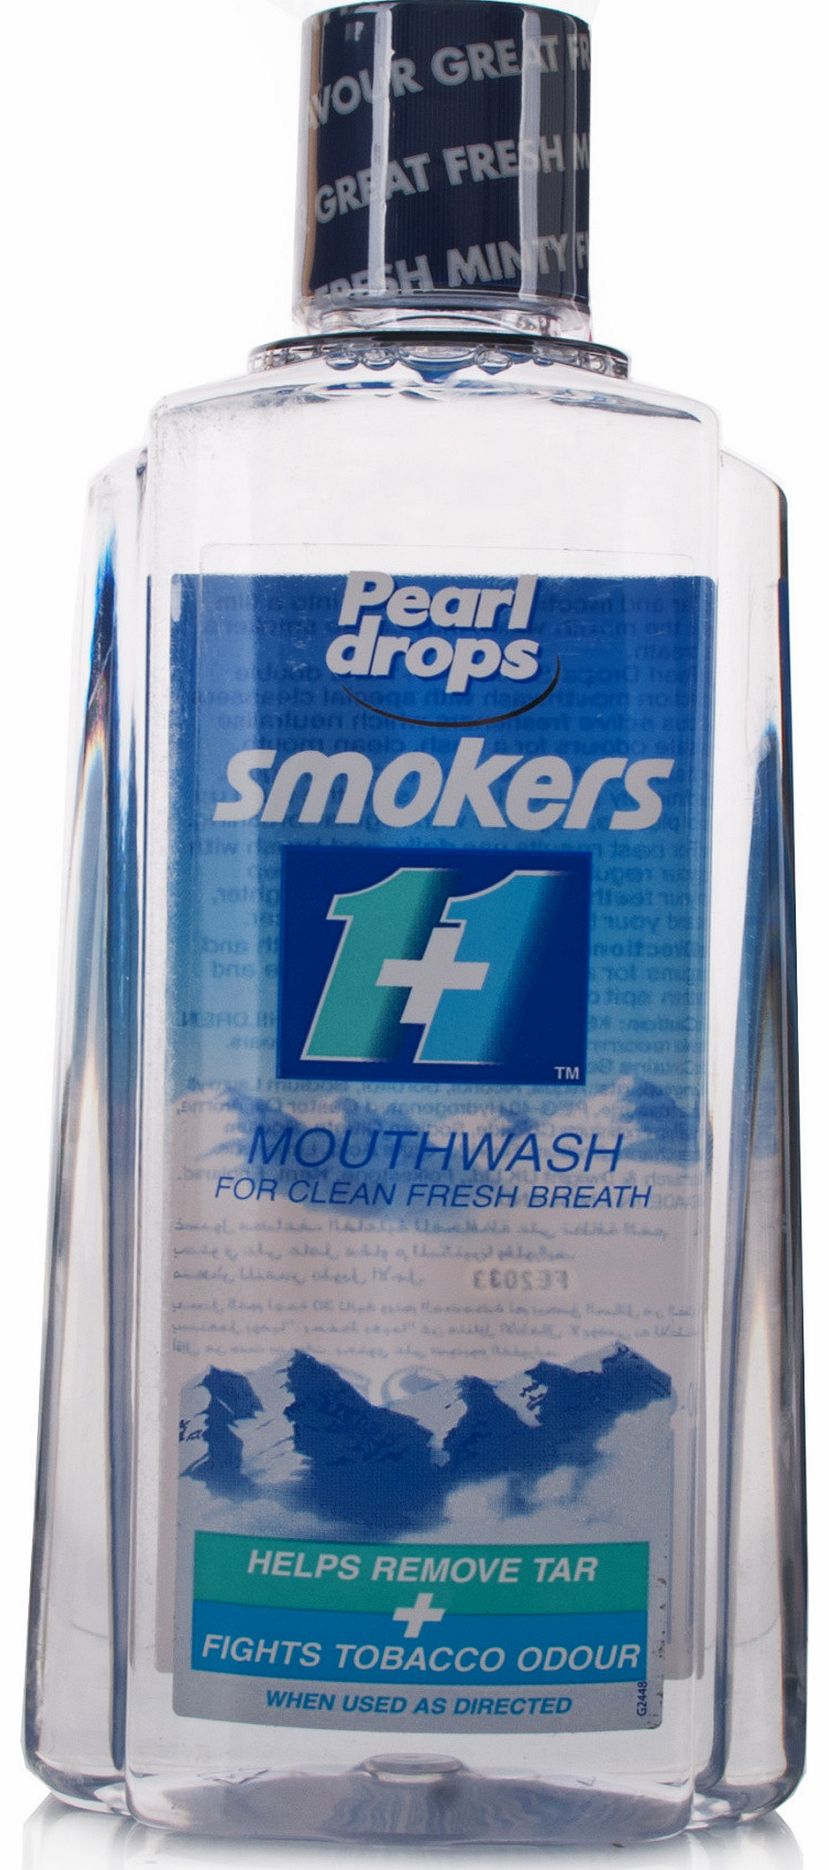 Pearl Drops Smokers Mouthwash